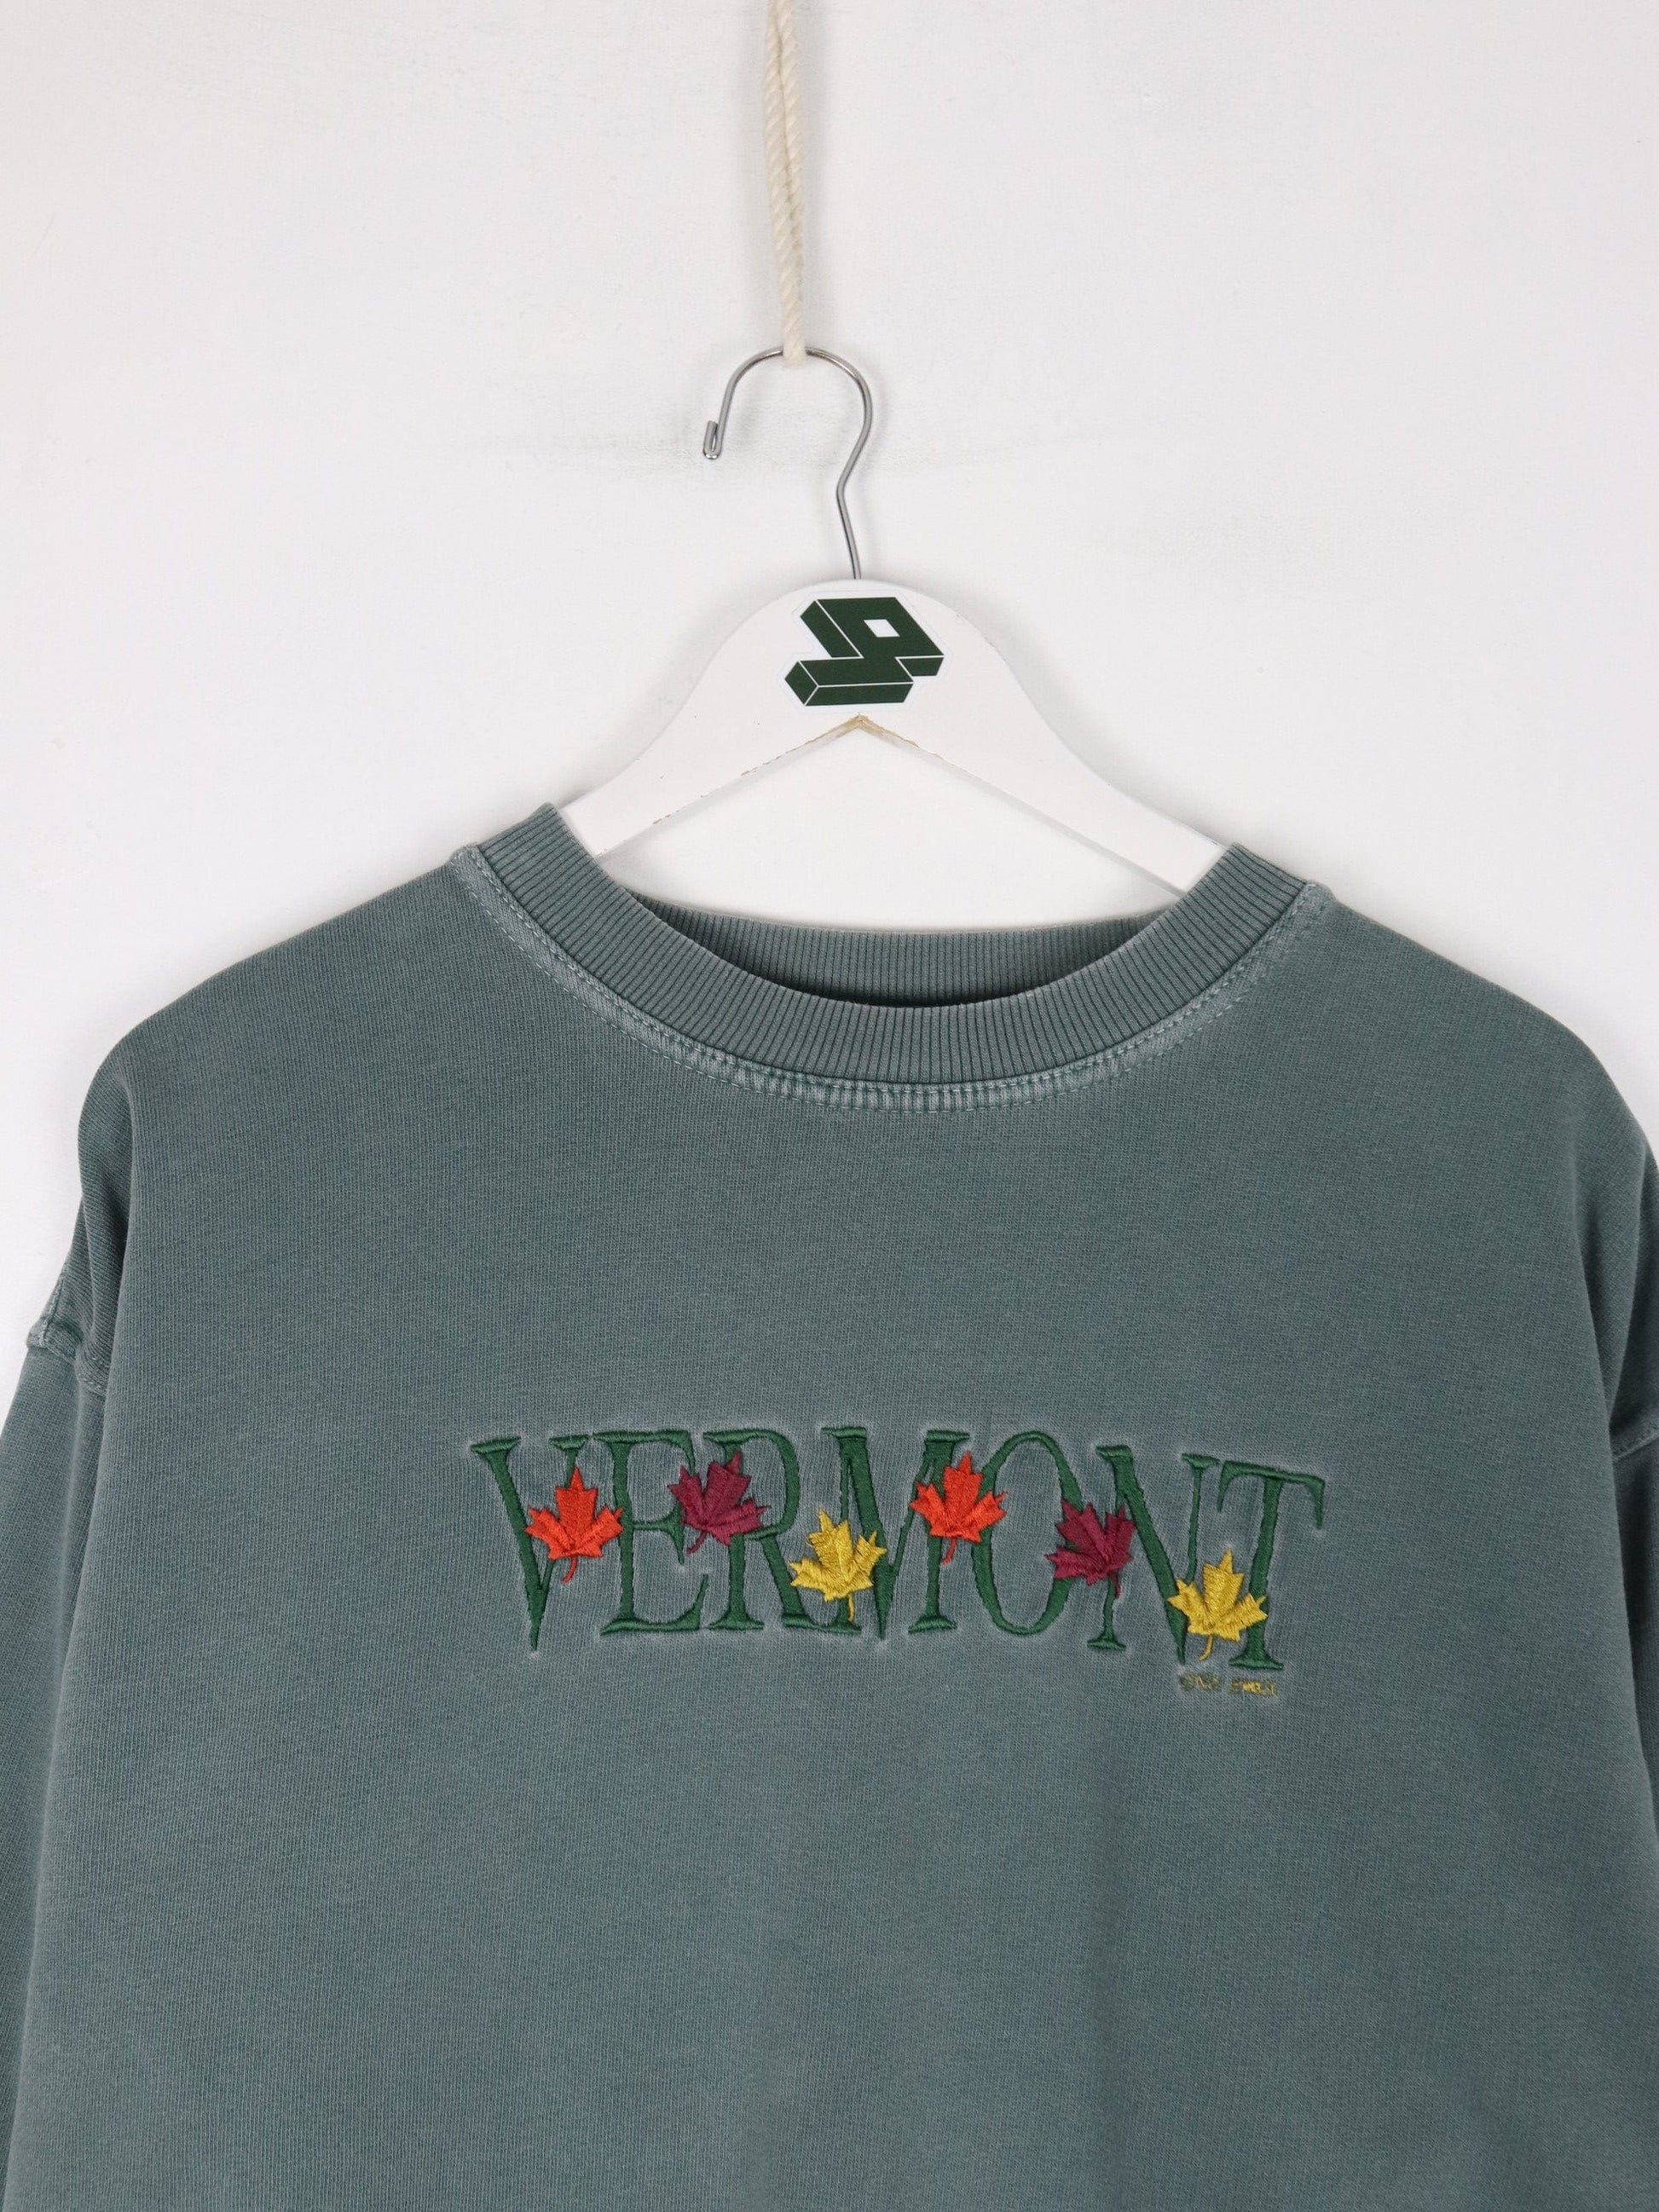 Other Sweatshirts & Hoodies Vintage Vermont Sweatshirt Mens Large Green Dyed